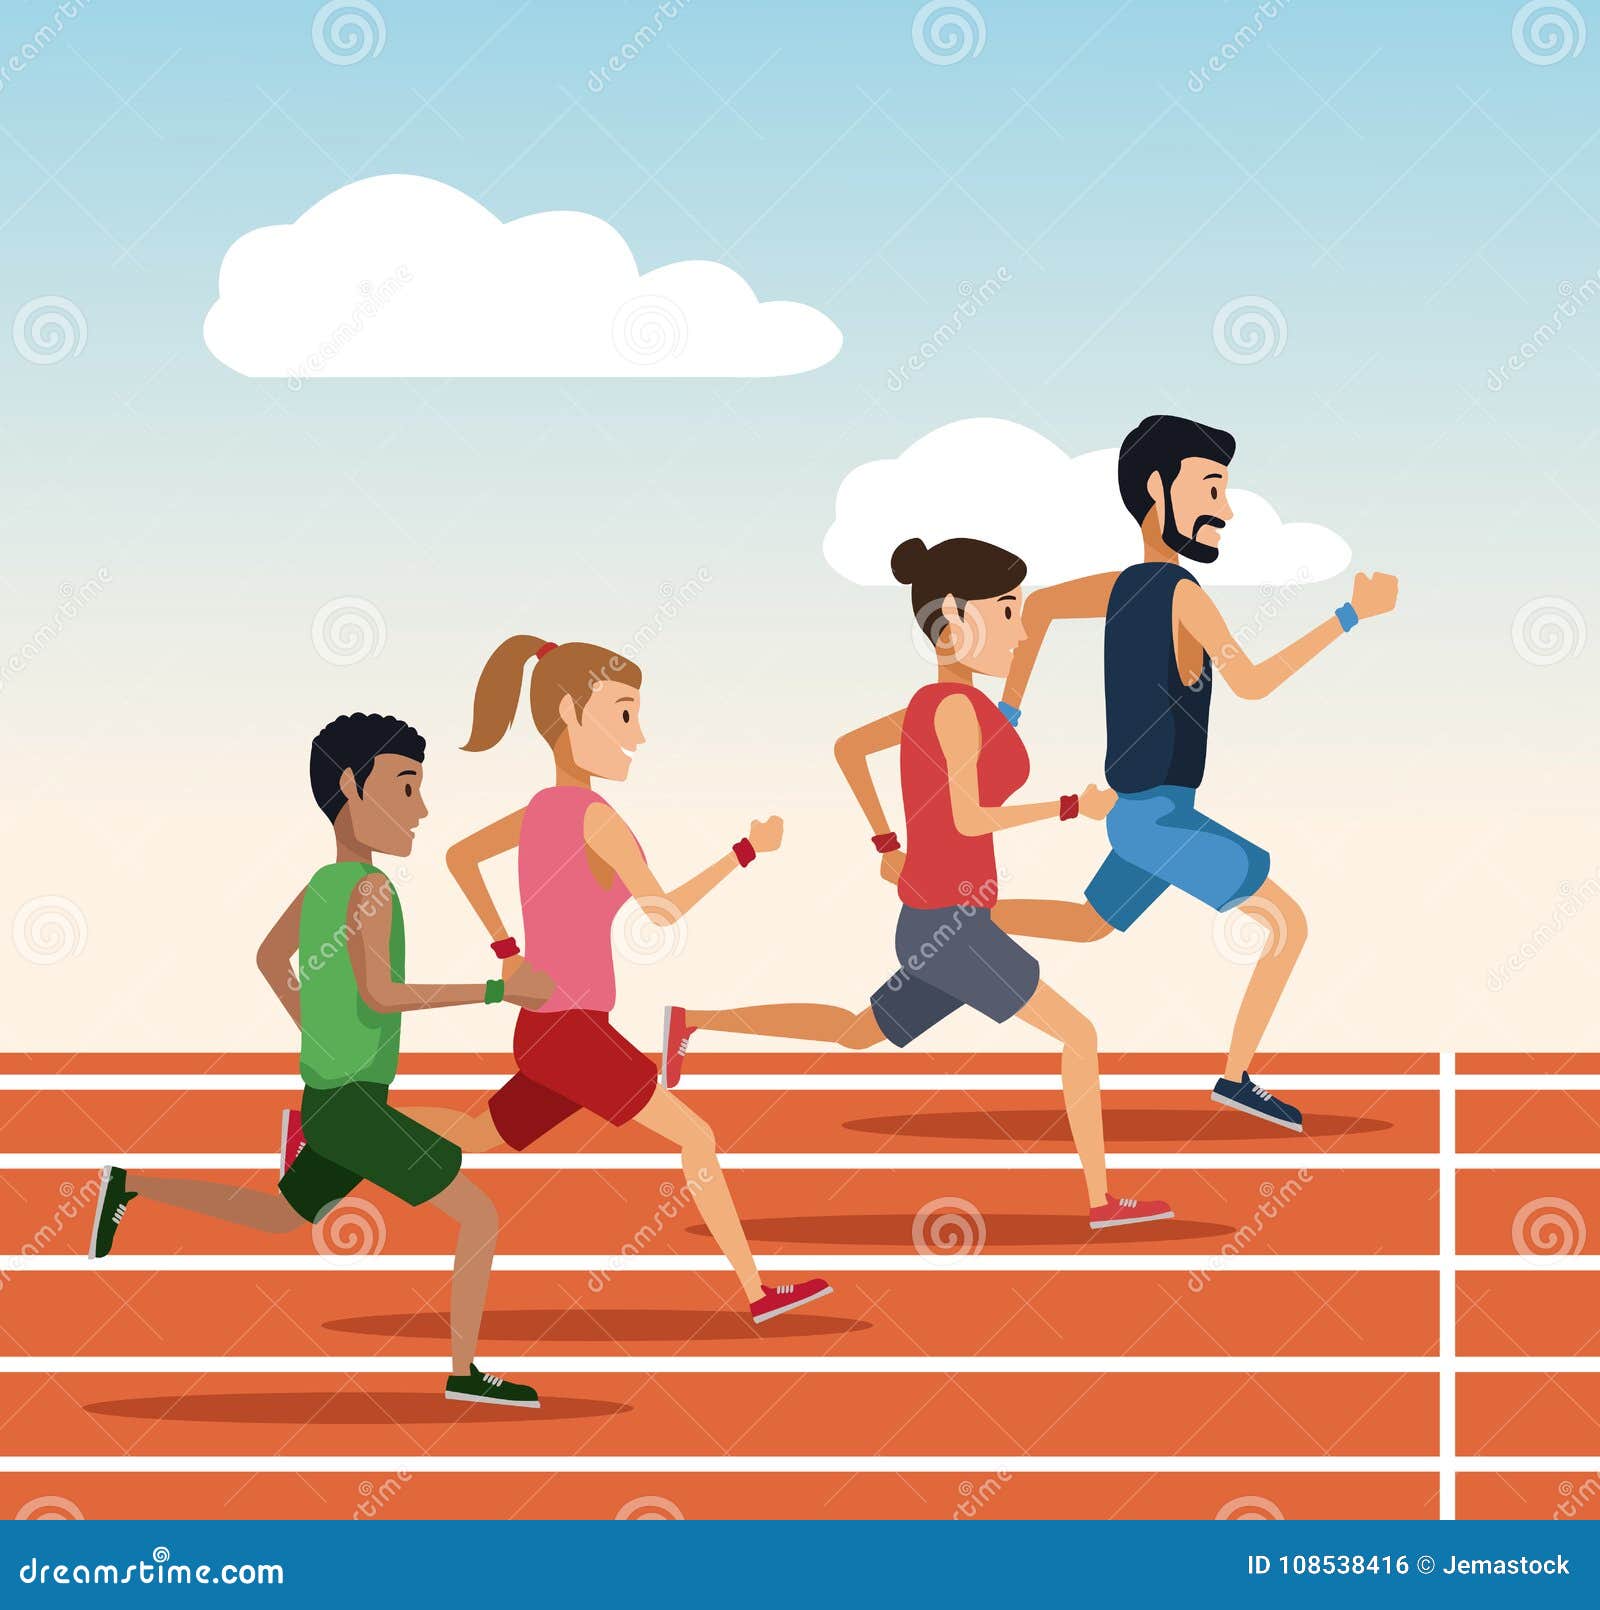 People running on track stock vector. Illustration of health - 108538416